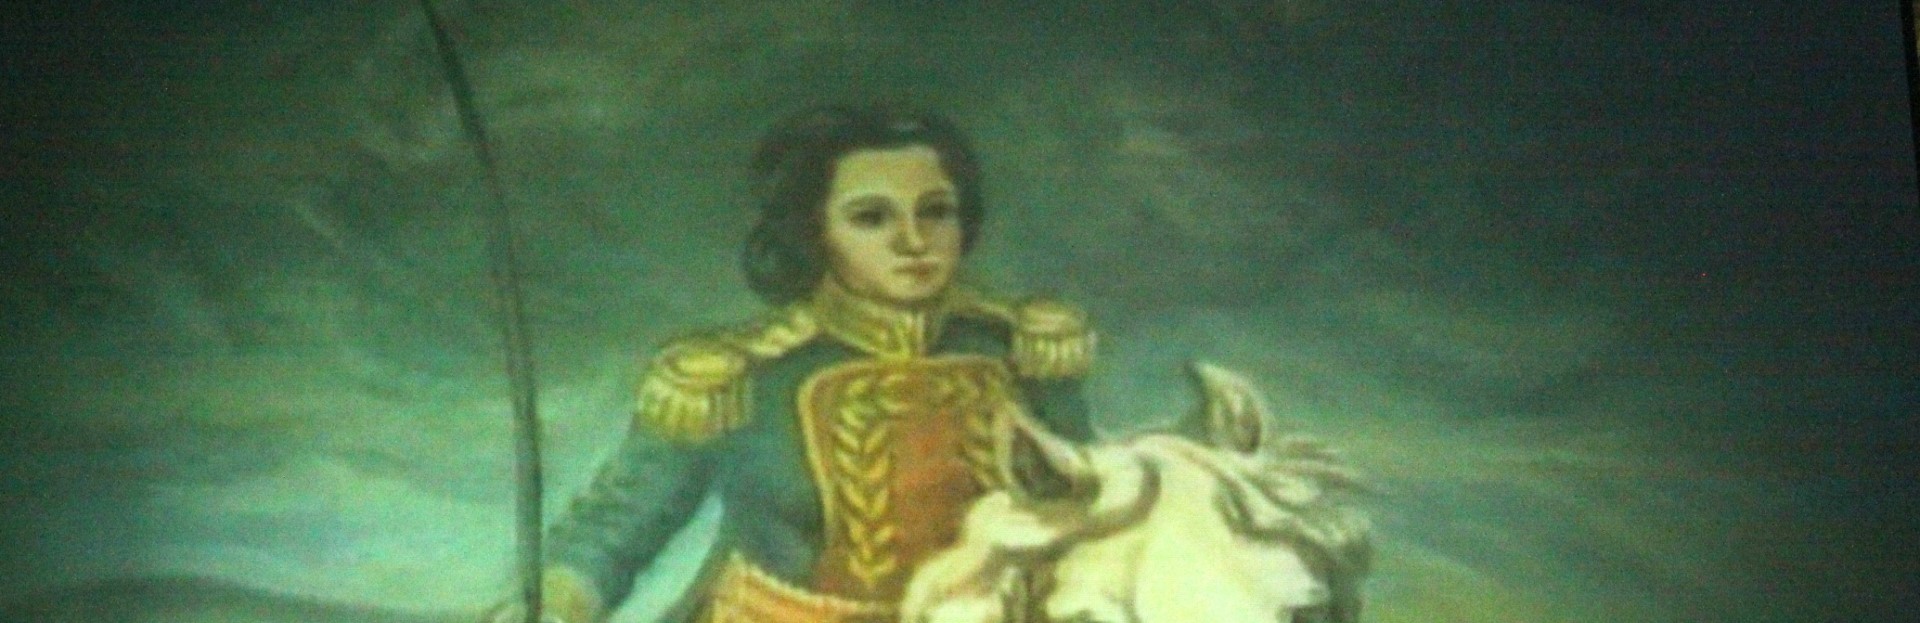 Fallecimiento de Manuela Sáenz, Heroína y “Libertadora del Libertador”